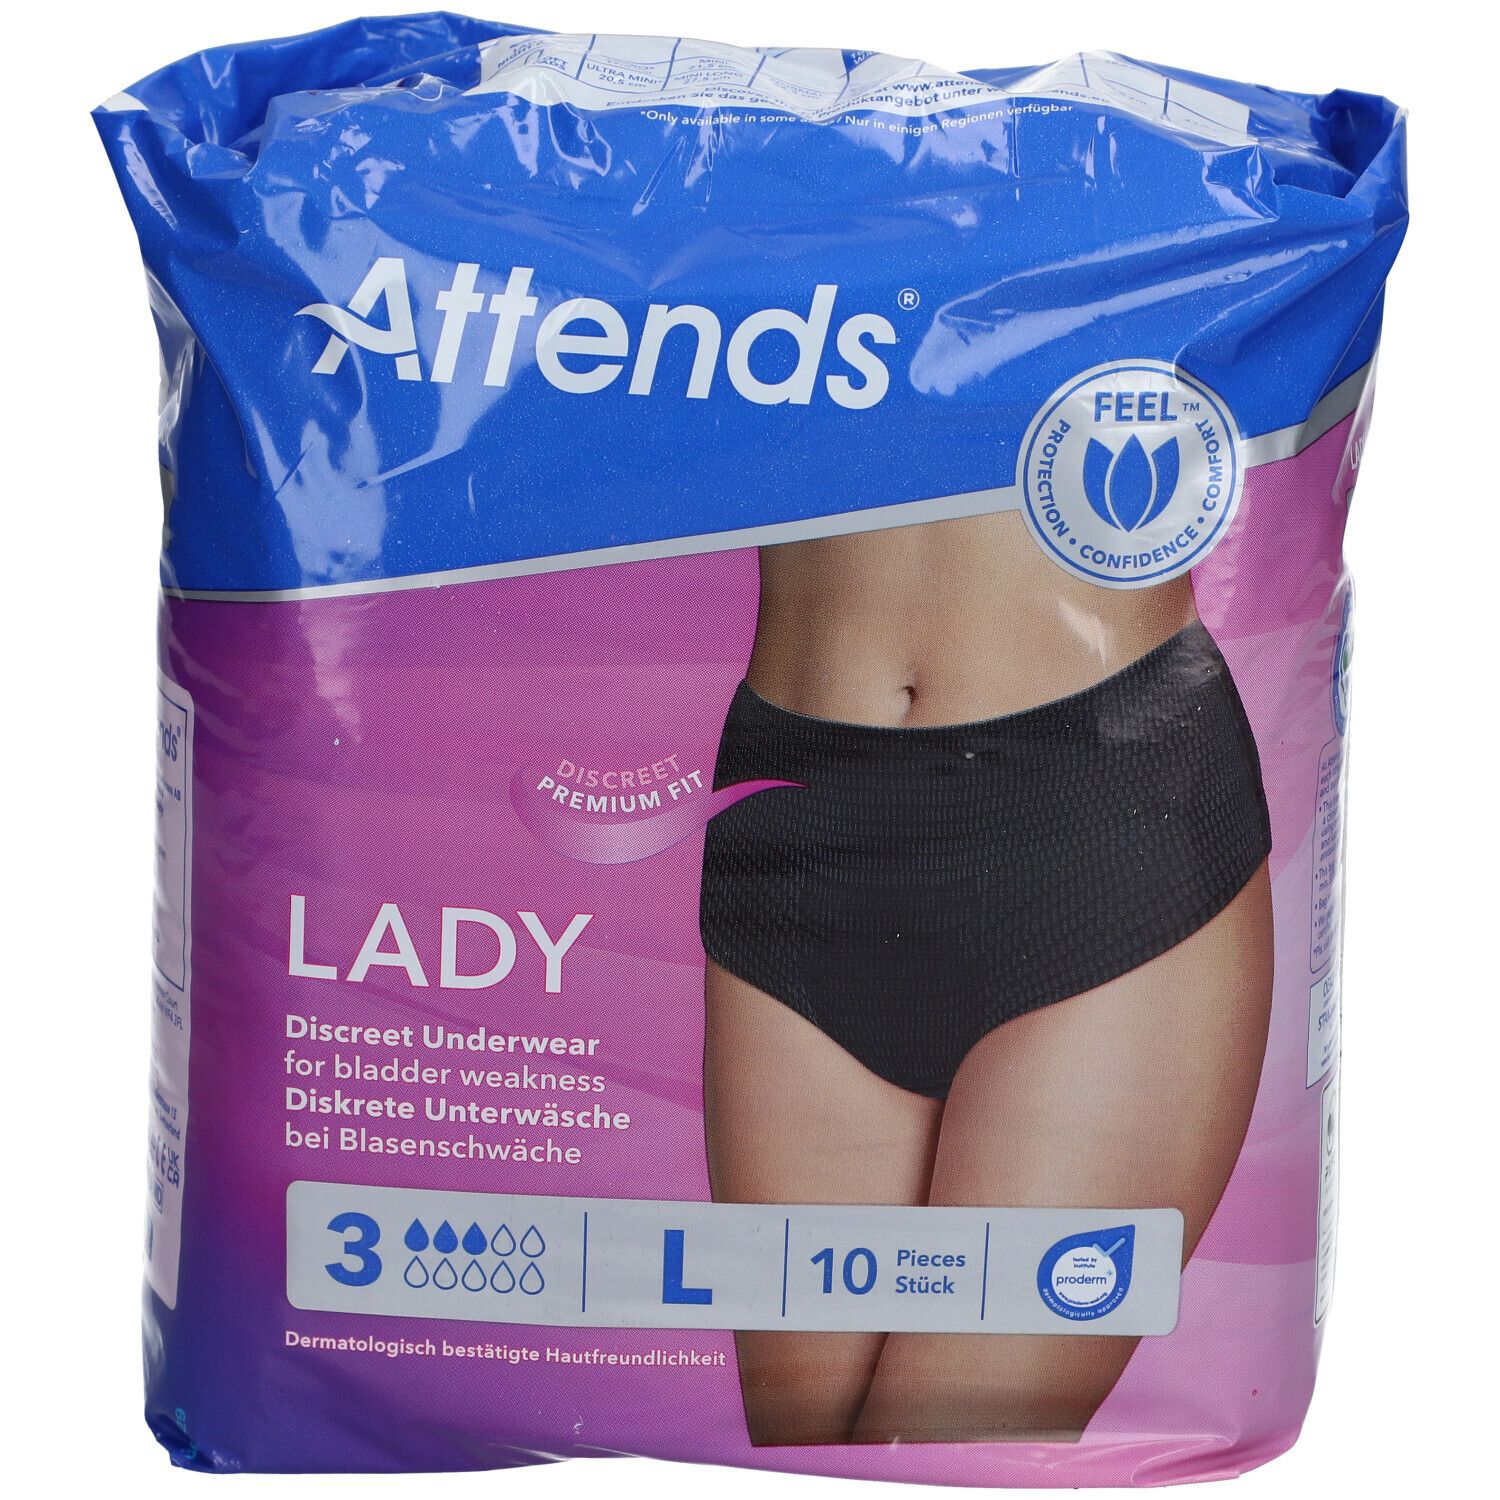 Attends Lady Discreet Underwear